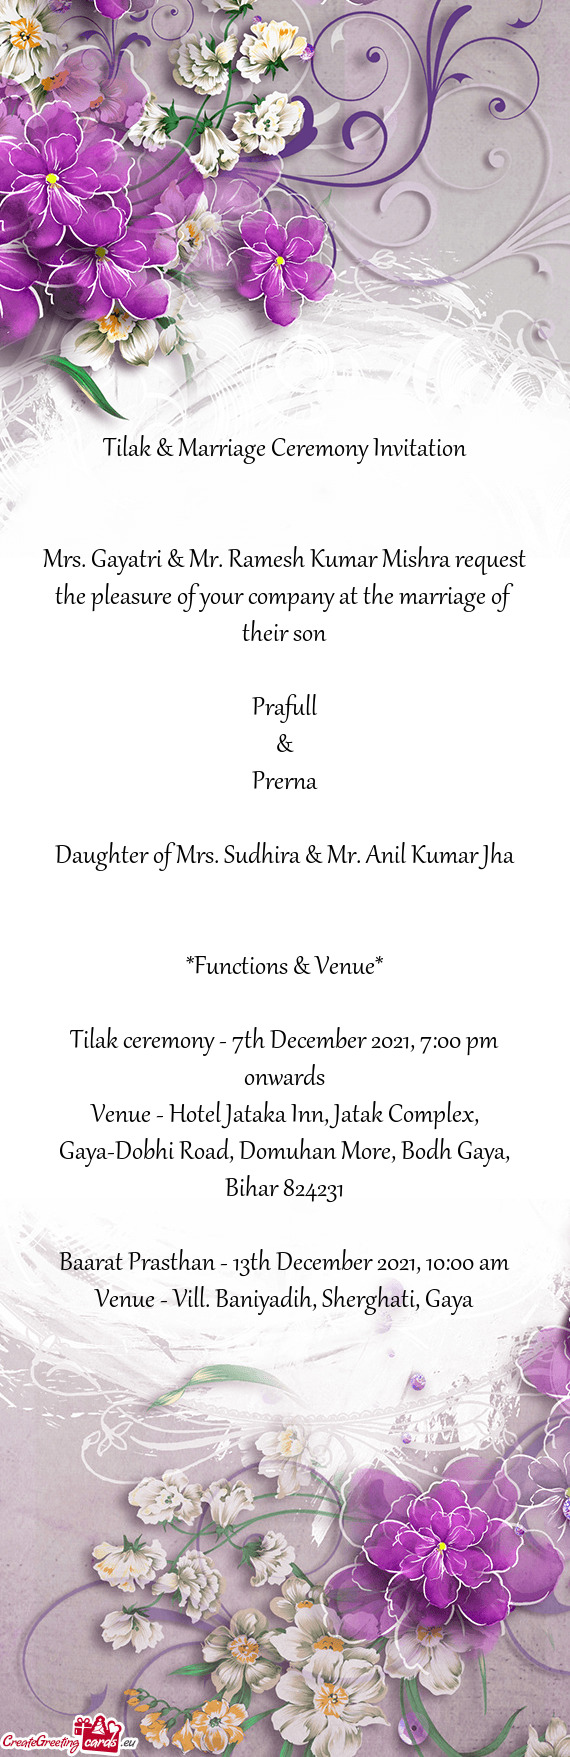 Tilak & Marriage Ceremony Invitation